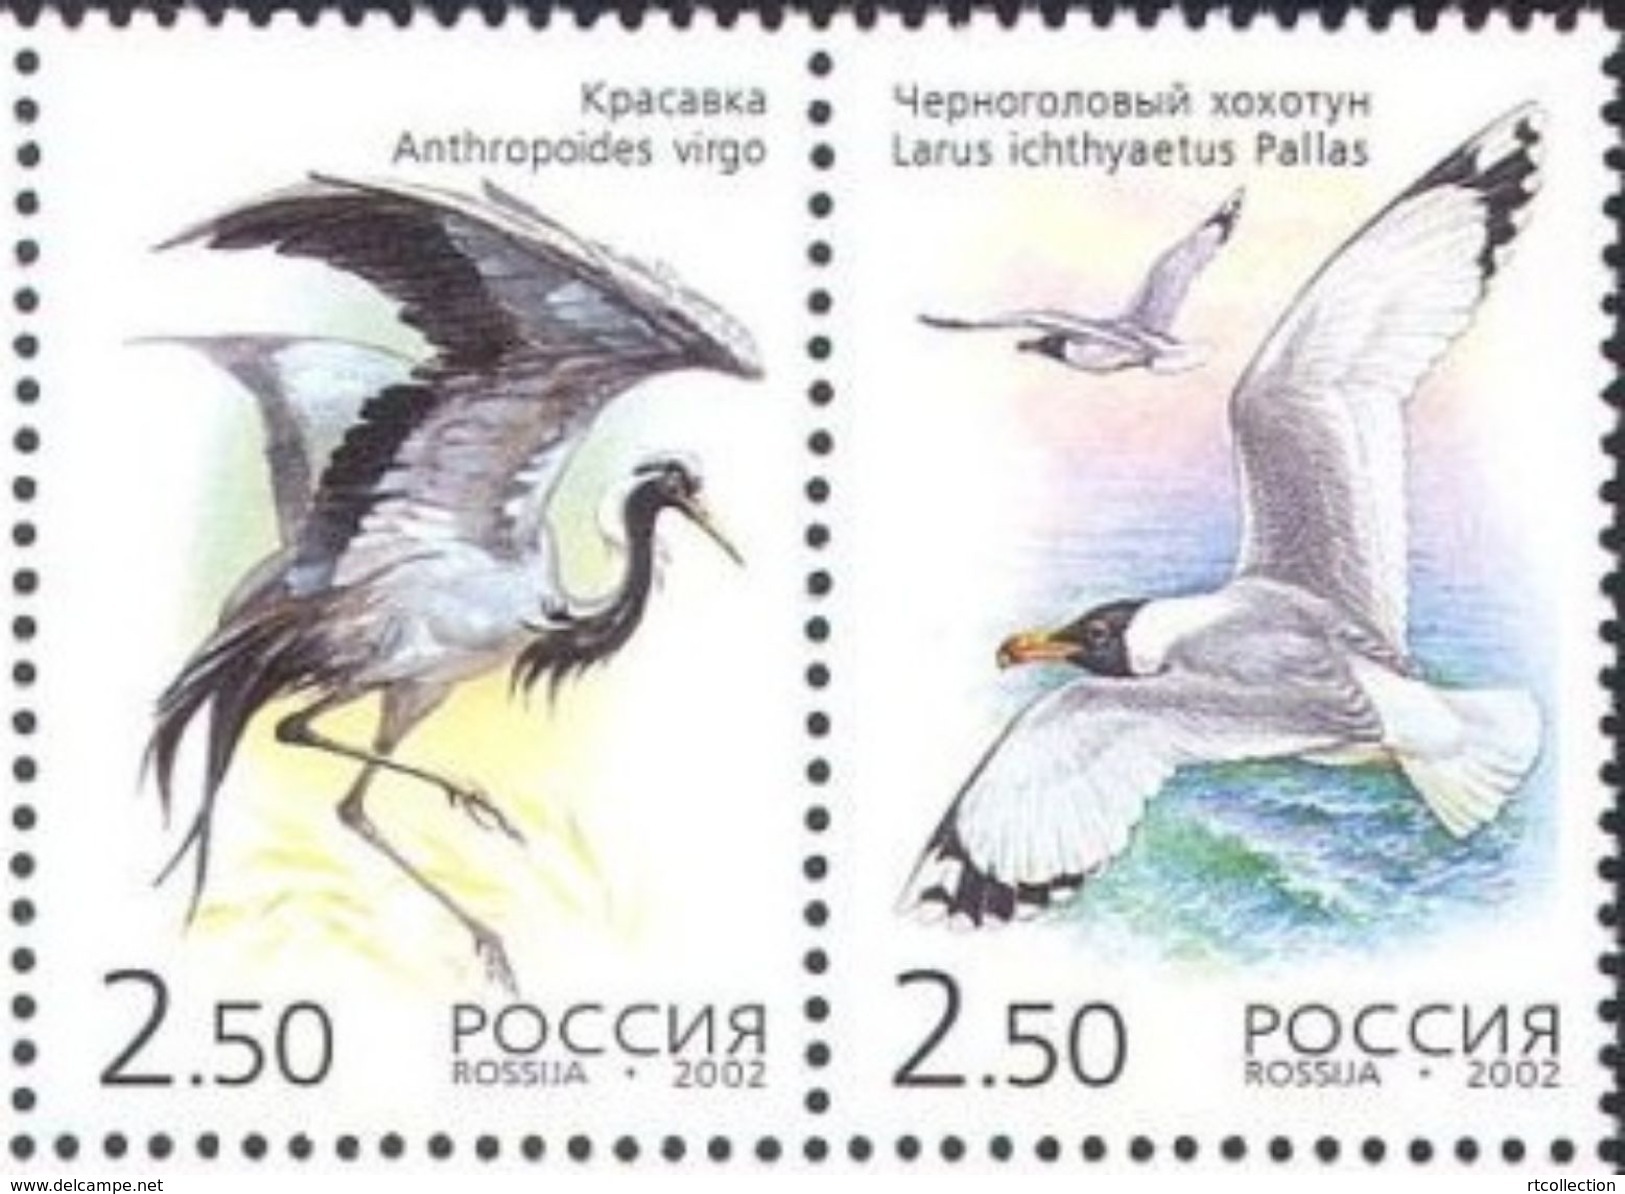 Russia 2002 Kazakhstan Joint Issue Birds Crane Cranes Gull Bird Animal Fauna Pair Stamps MNH Mi 1008-1009 Scott 6709 - Cranes And Other Gruiformes